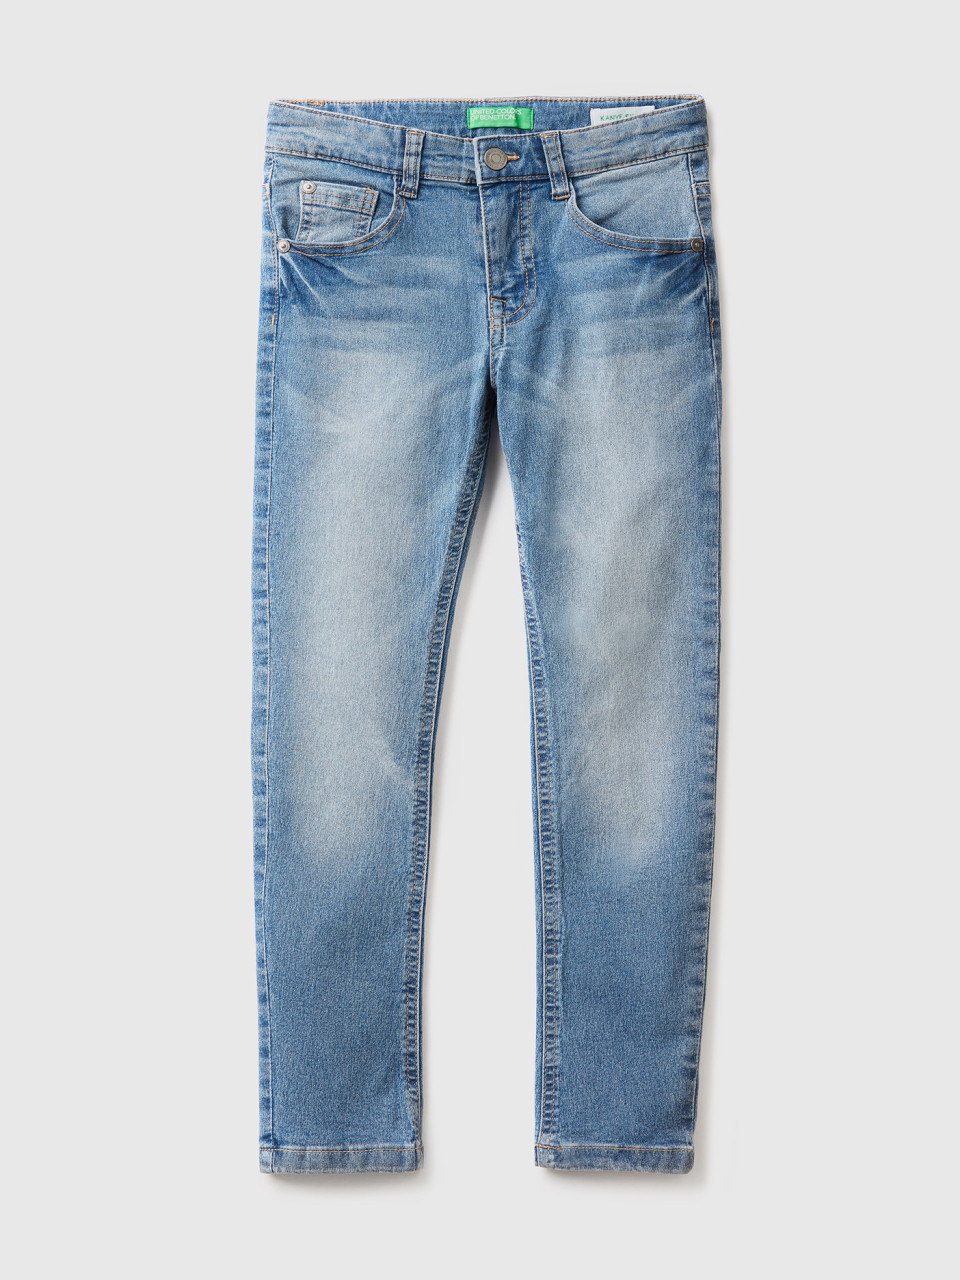 Benetton, Five-pocket Skinny Fit Jeans, Air Force Blue, Kids